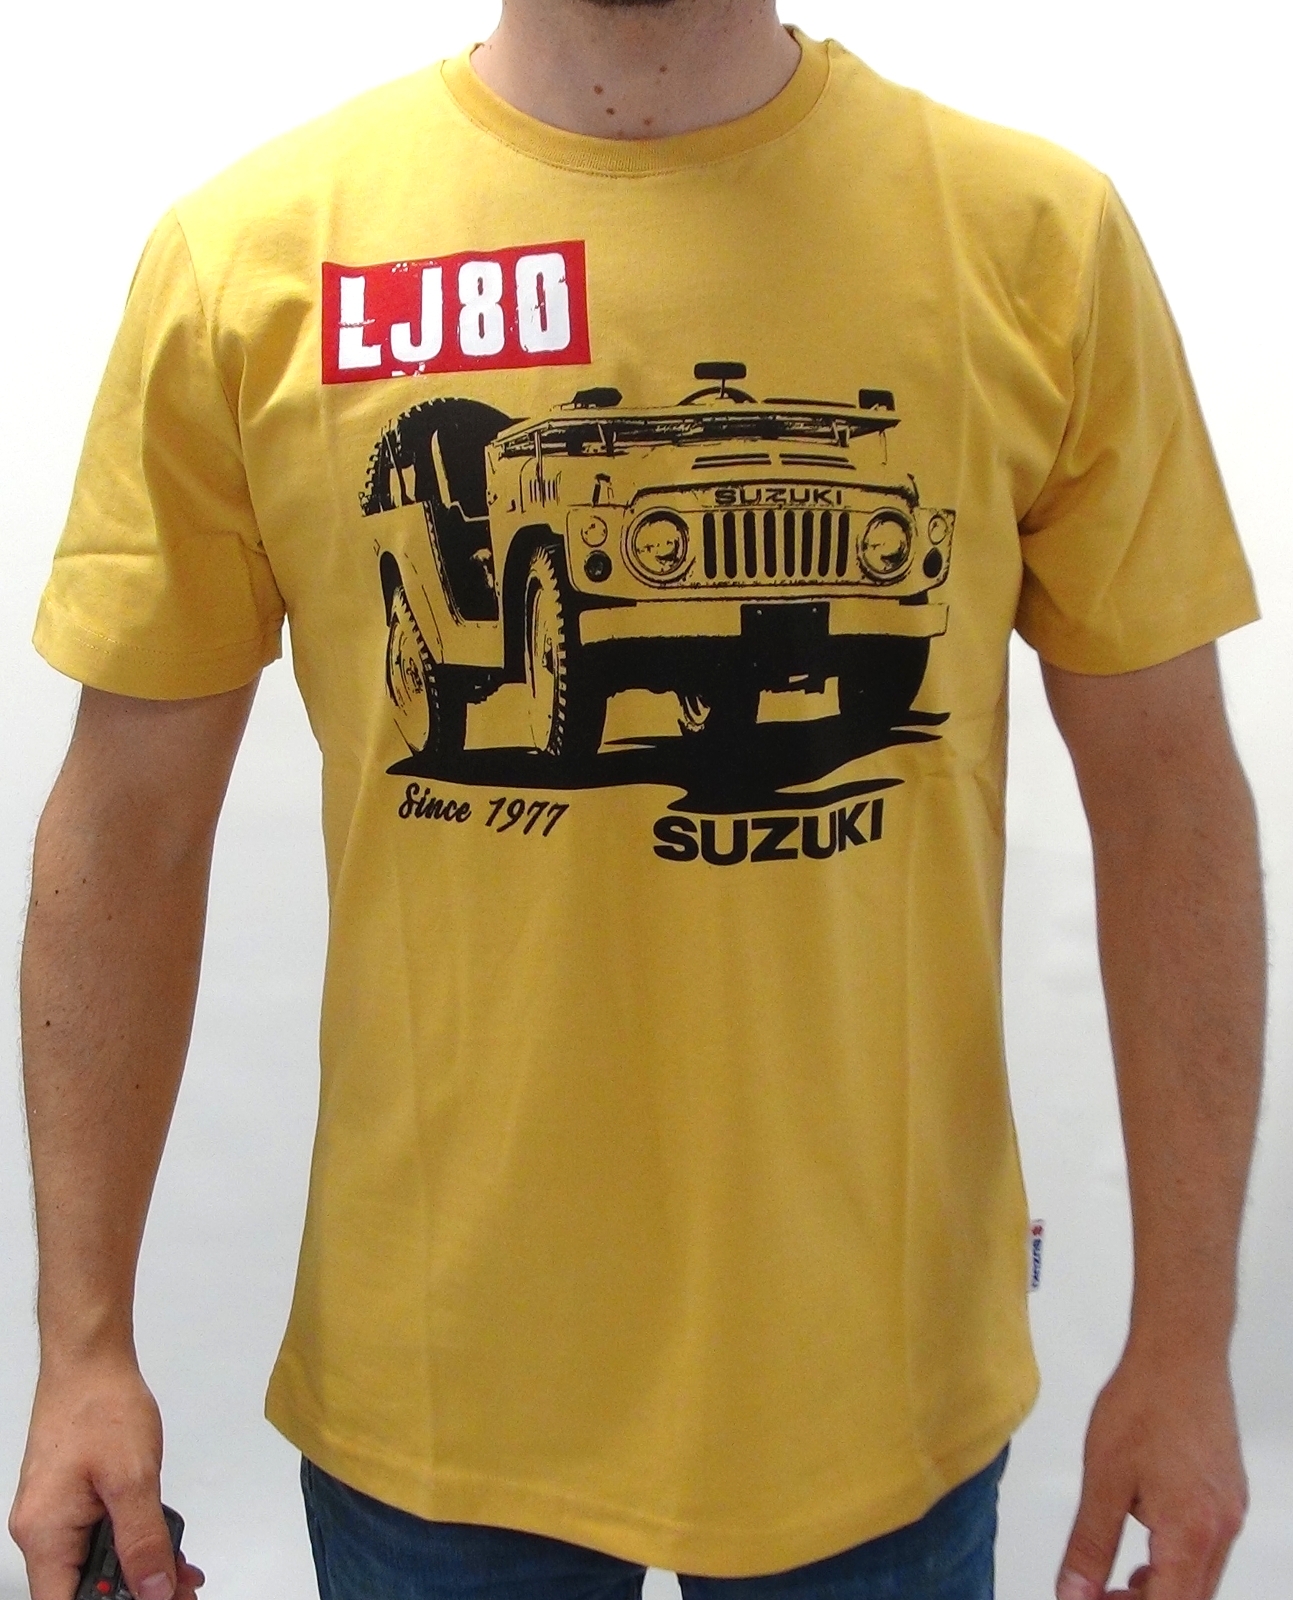 Genuine Suzuki LJ80 T-shirt 990F0-HTS19 